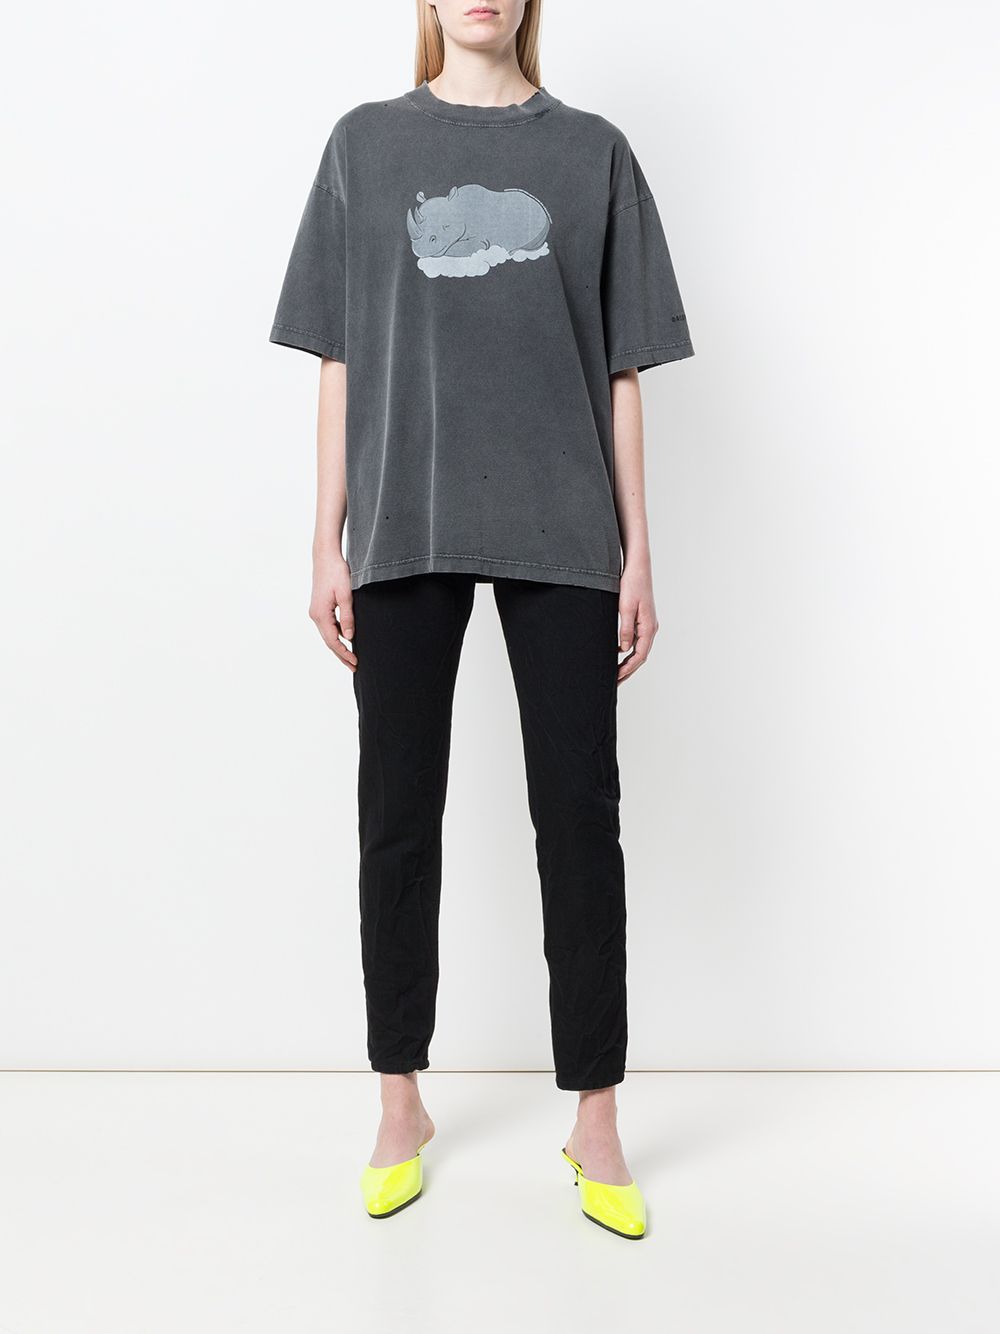 фото Balenciaga футболка с изображением носорога